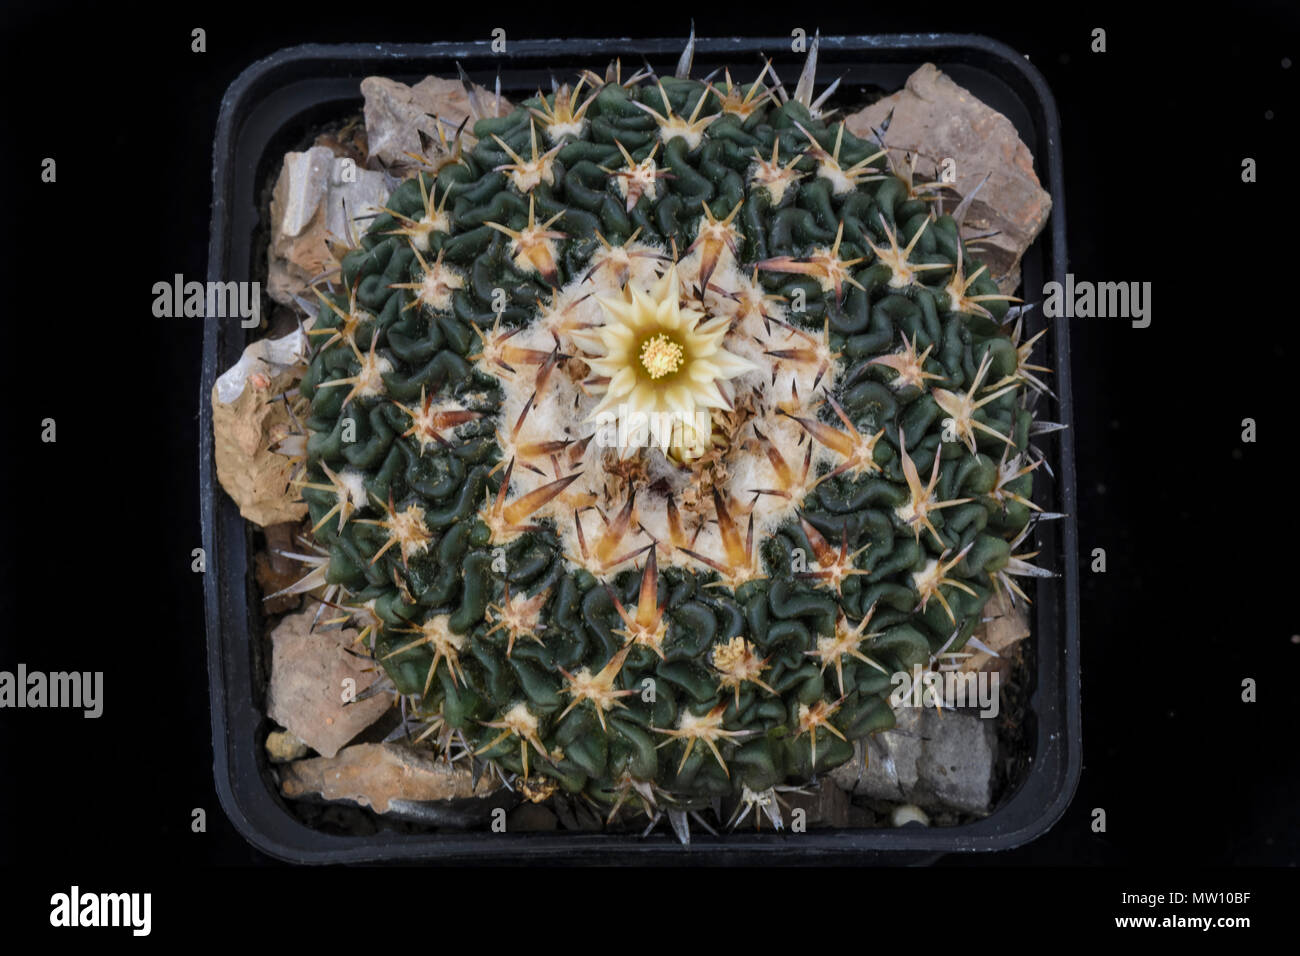 Cactus Echinofossulocactus con fiore isolato su nero Foto Stock